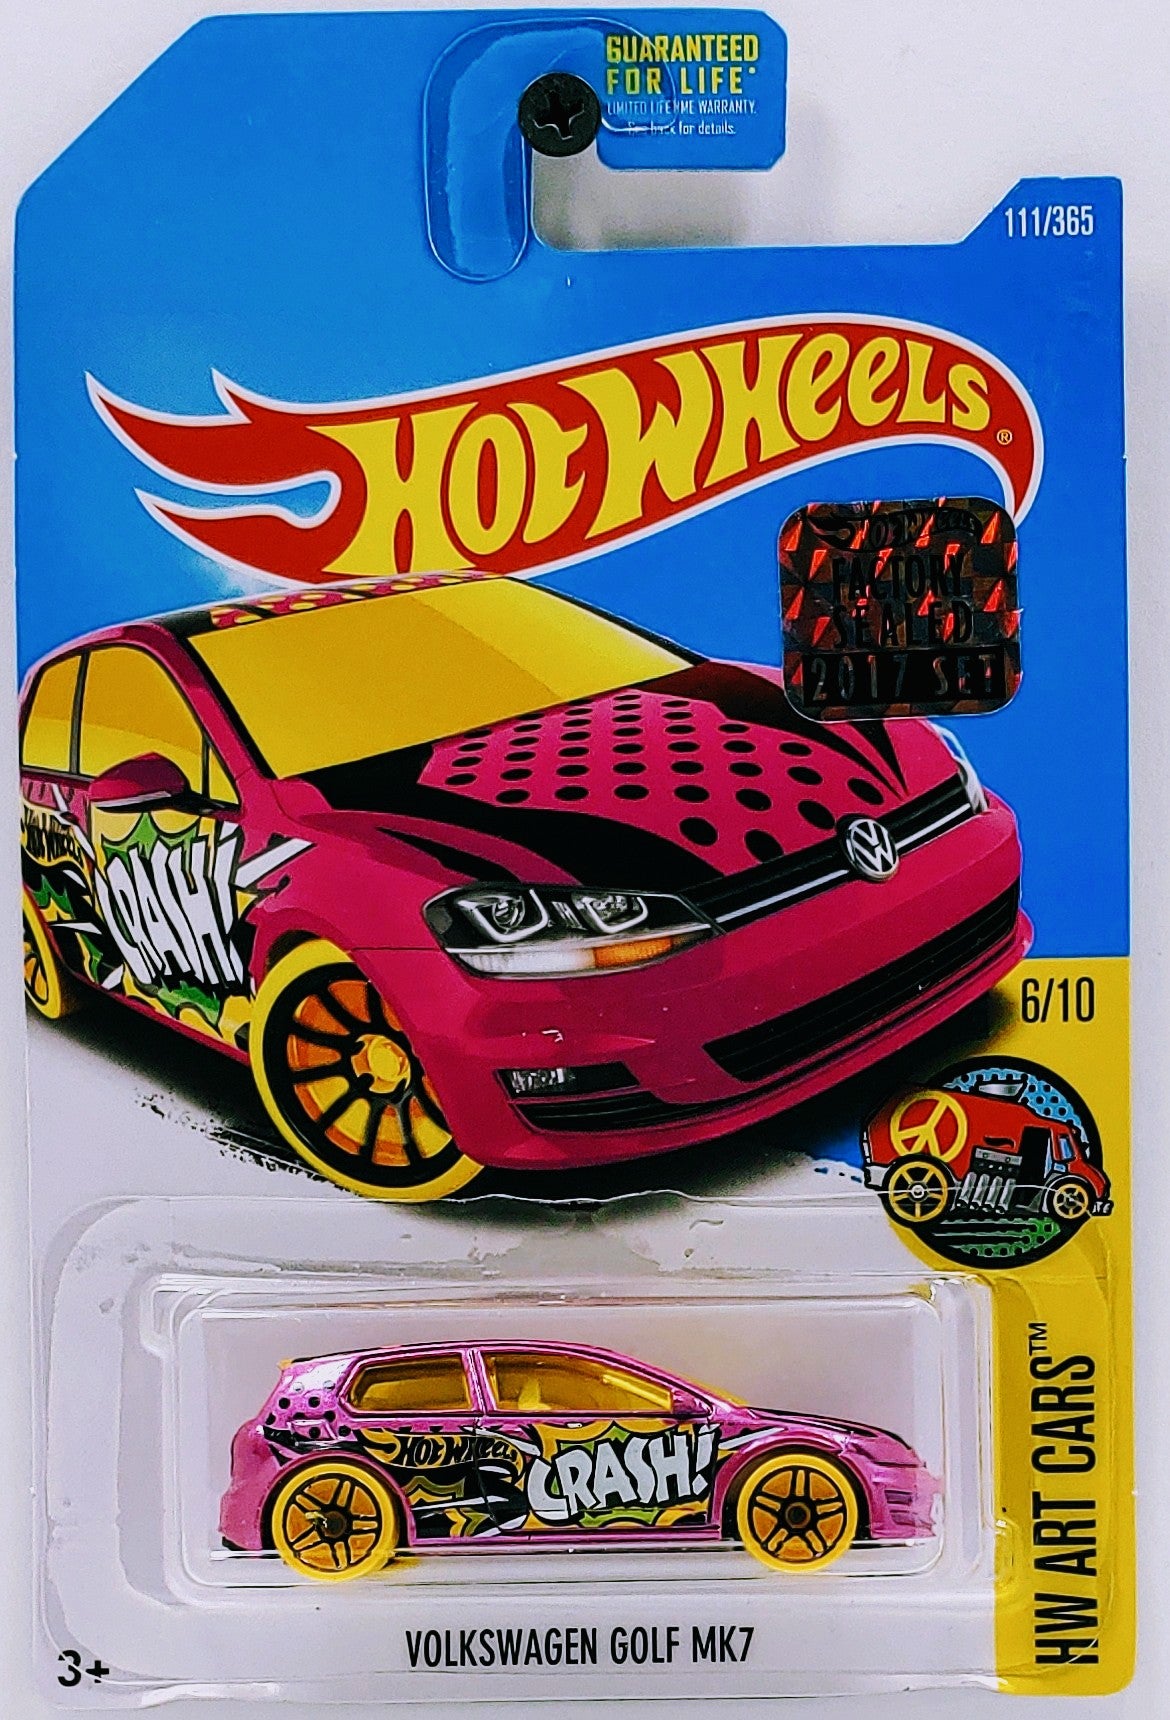 Hot Wheels 2017 - Collector # 111/365 - HW Art Cars 6/10 - Volkswagen Golf Mk7 - Pink - FSC